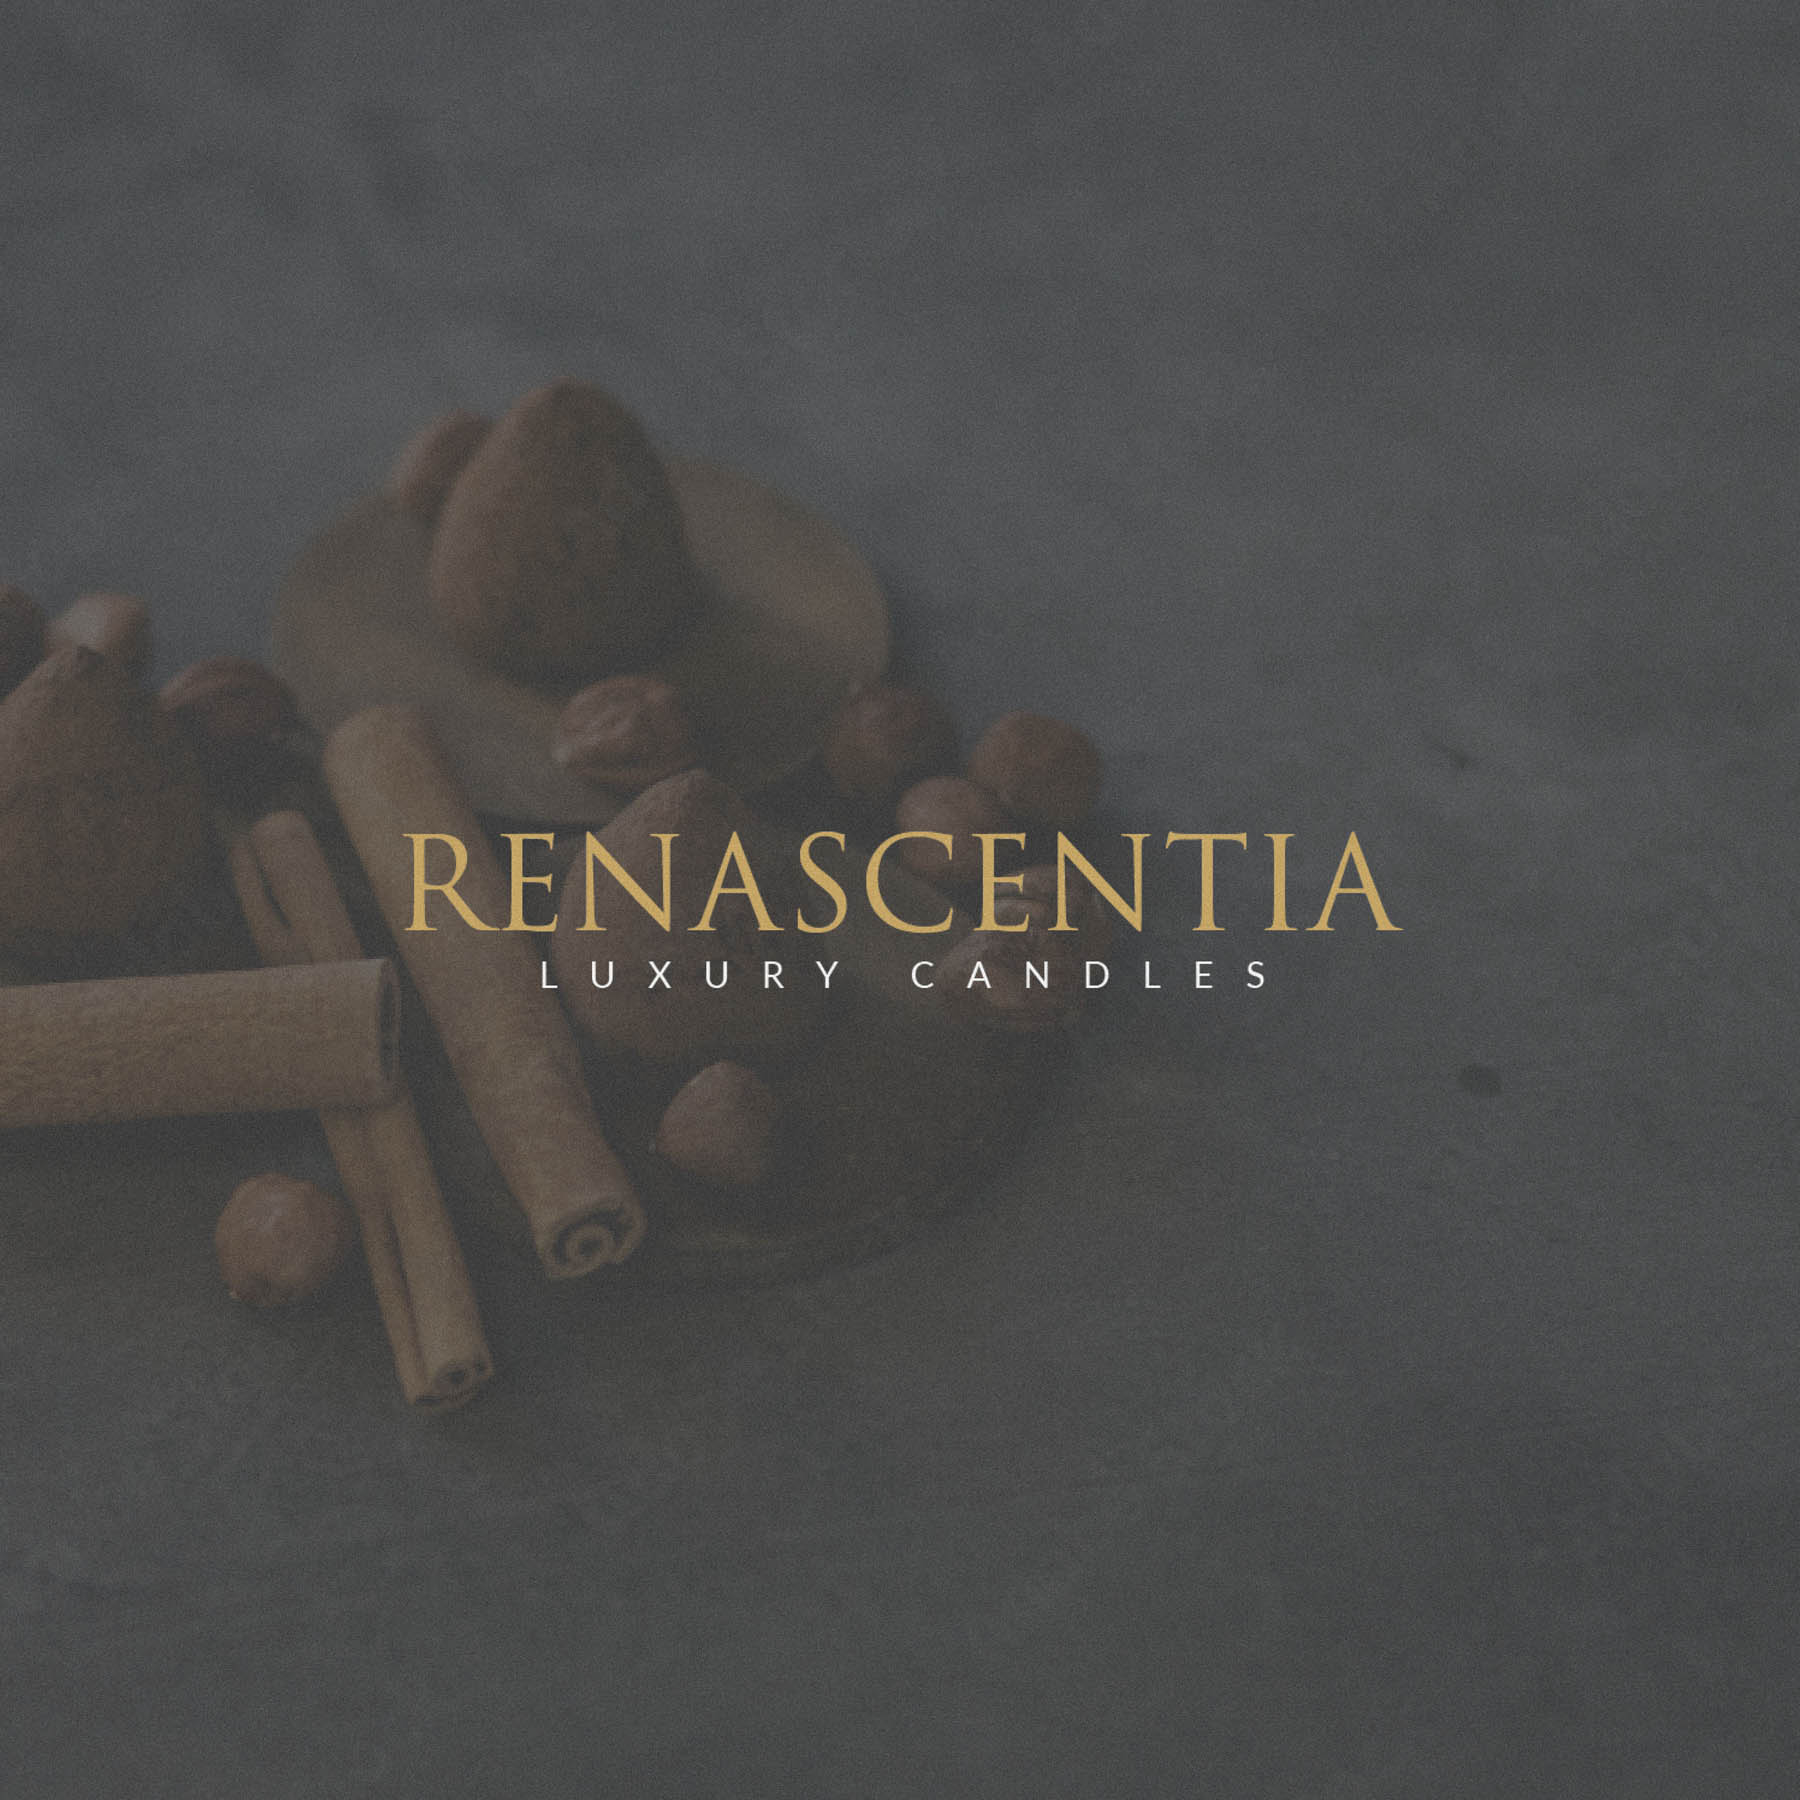 Renascentia luxury candle brand identity logo design london3